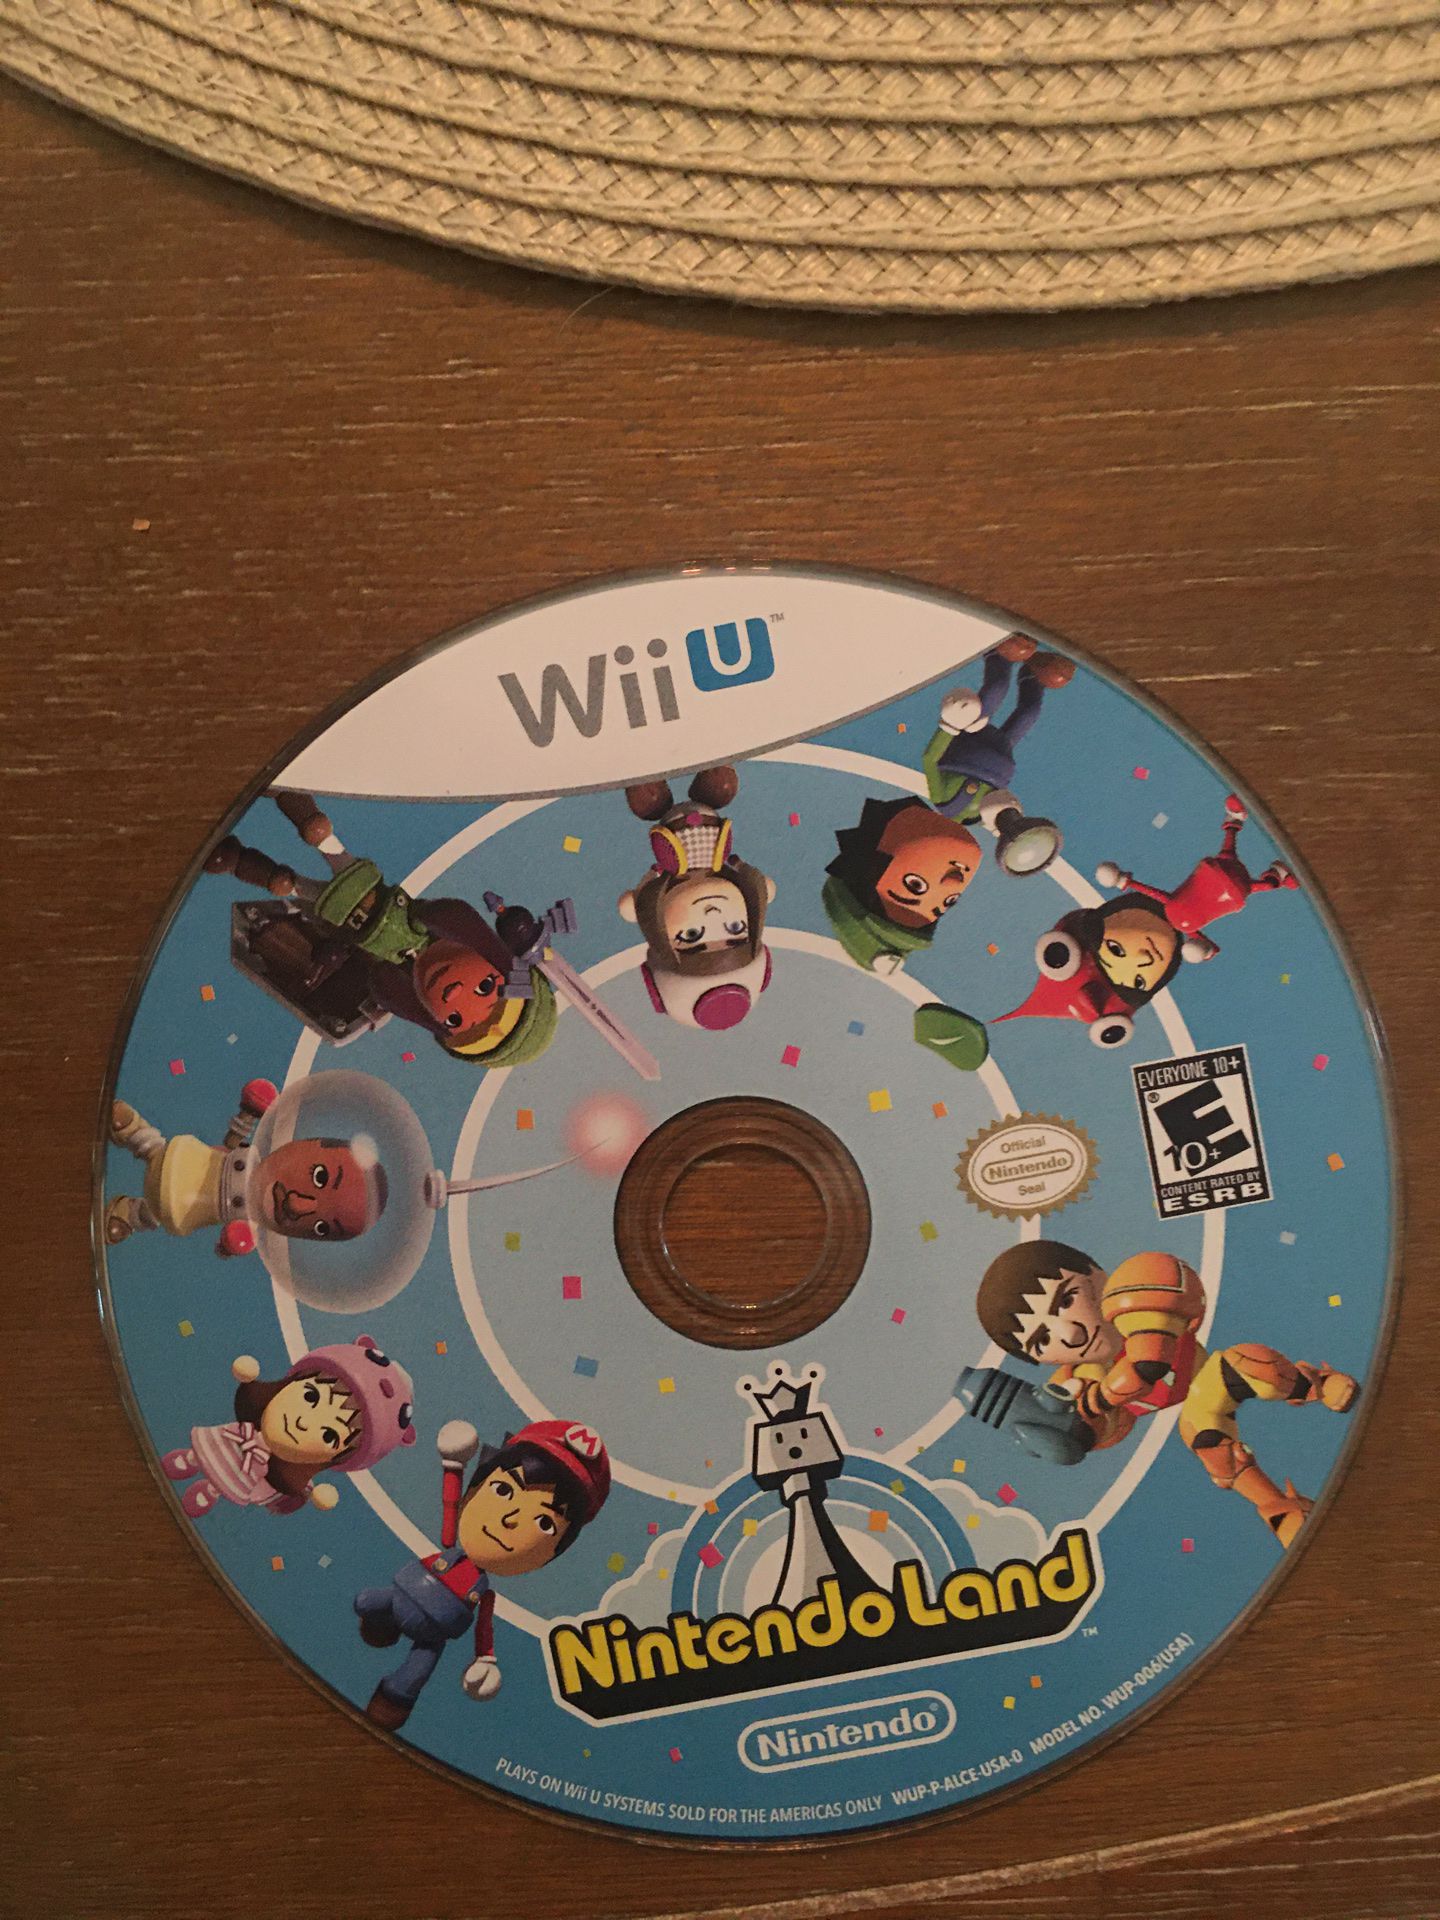 Nintendo Wii U Nintendo land